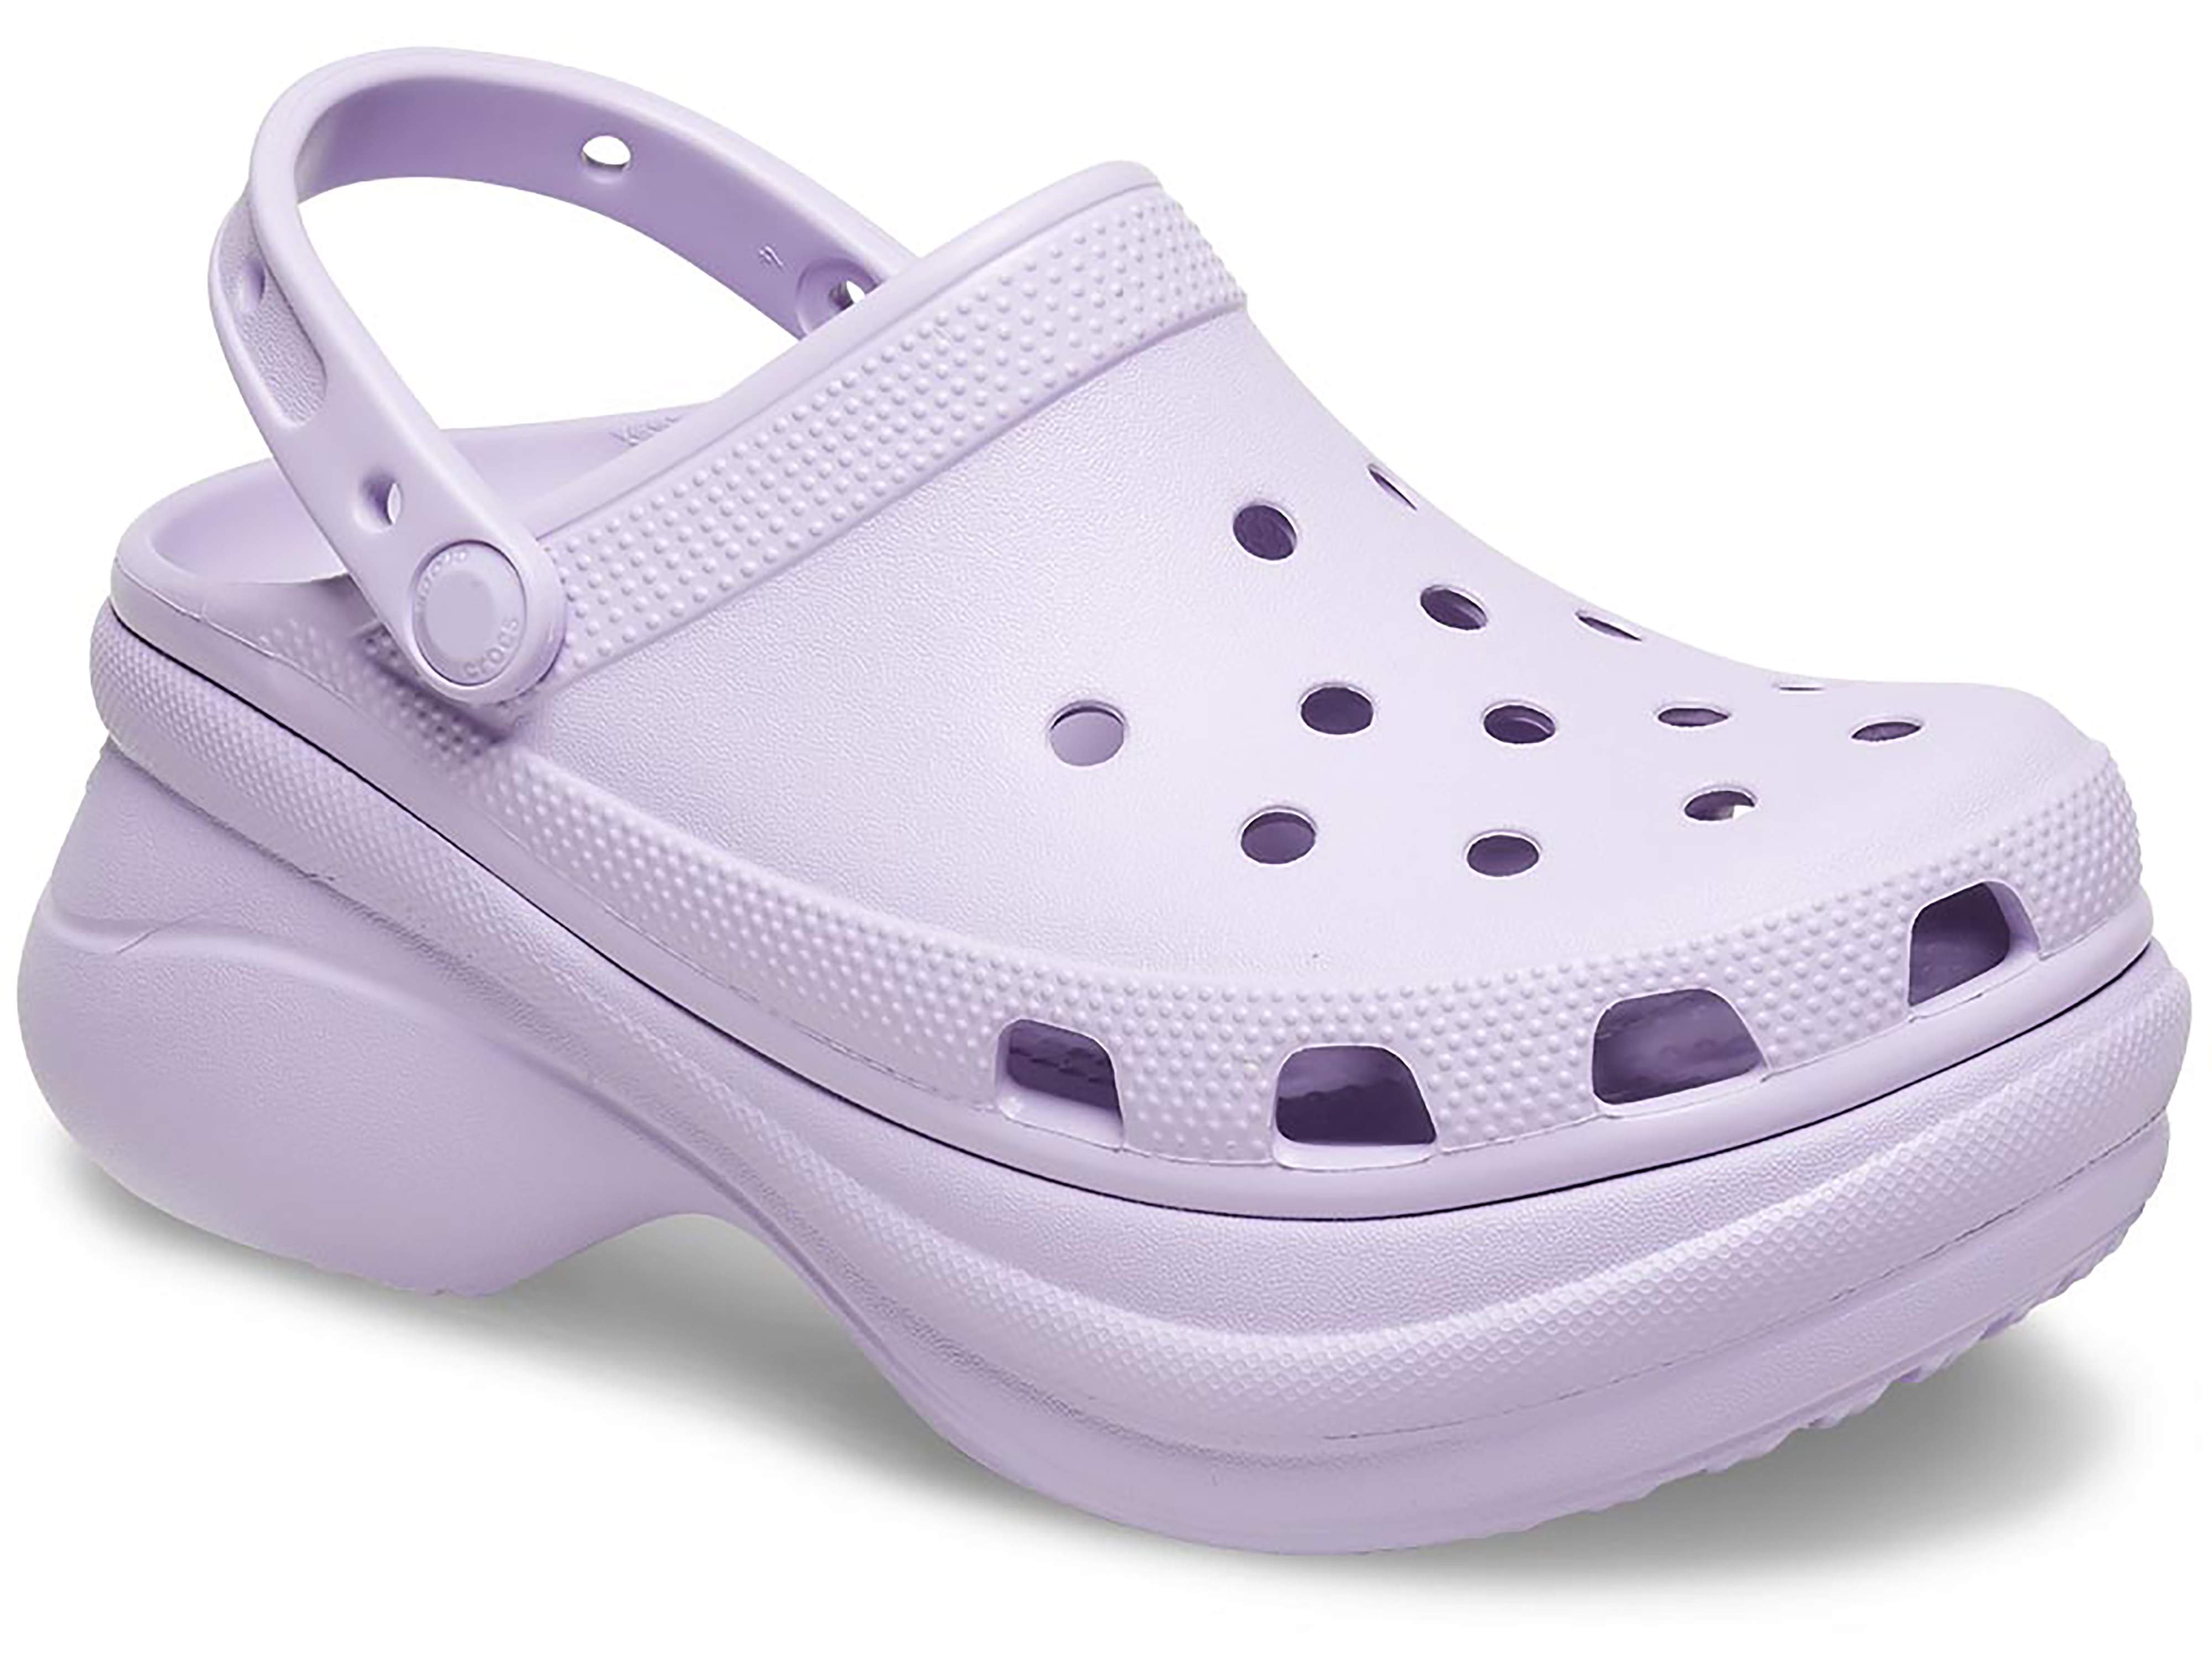 crocs classic clog women's